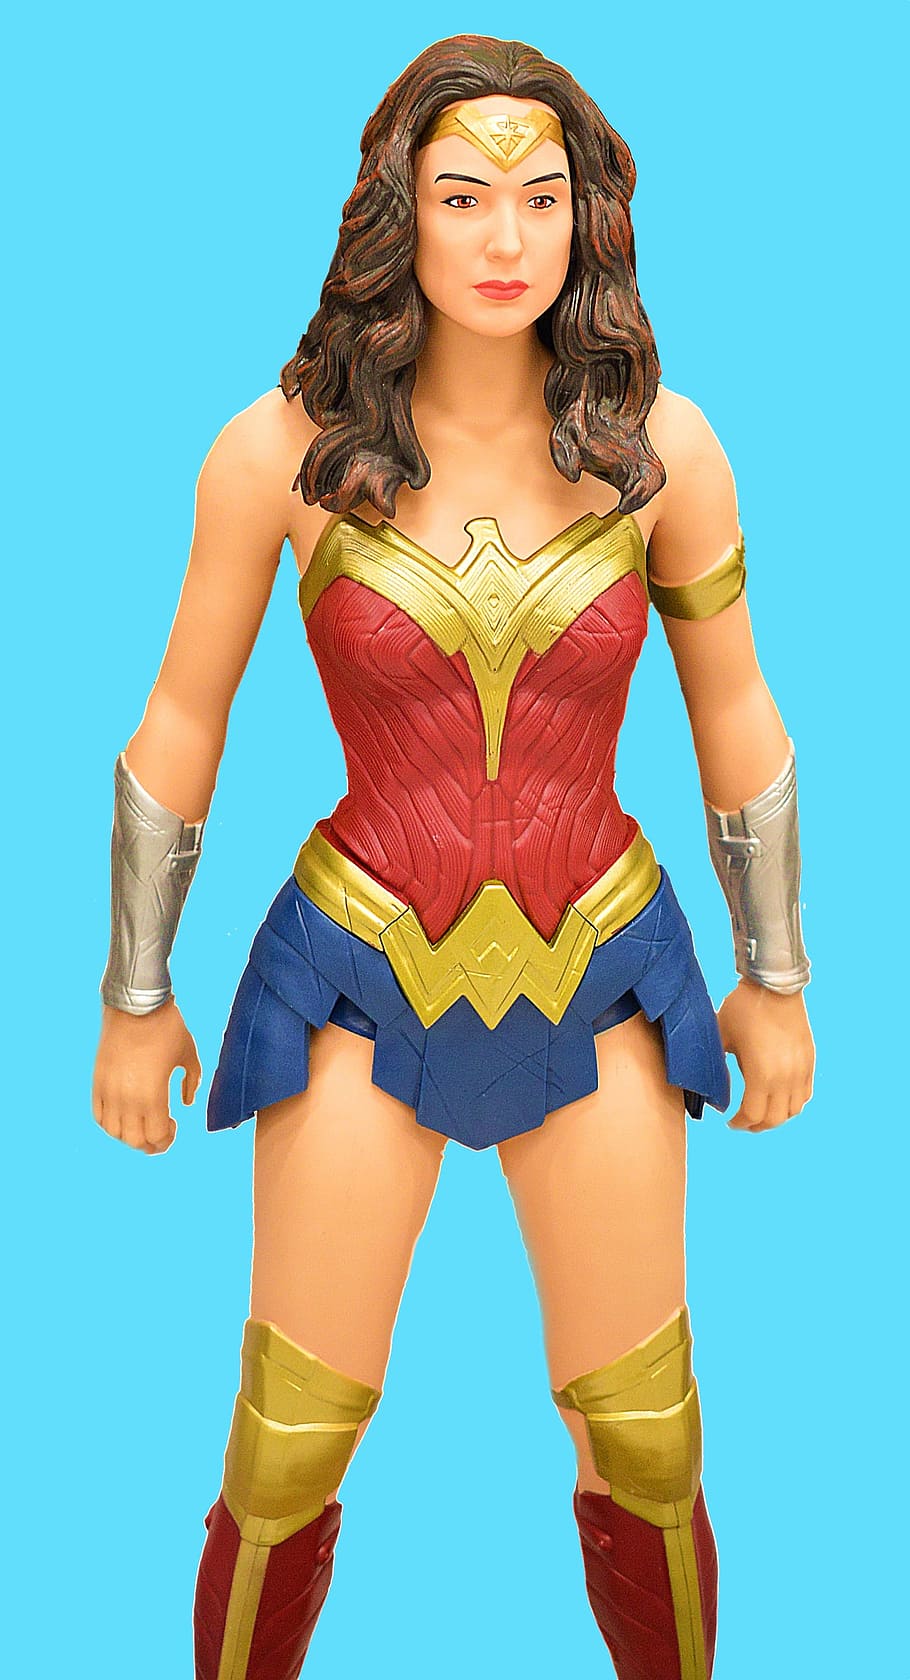 Wonder Woman, Superhero, Strong, fuerza, mujer, vestuario, poder, poderoso, feminismo, feminista